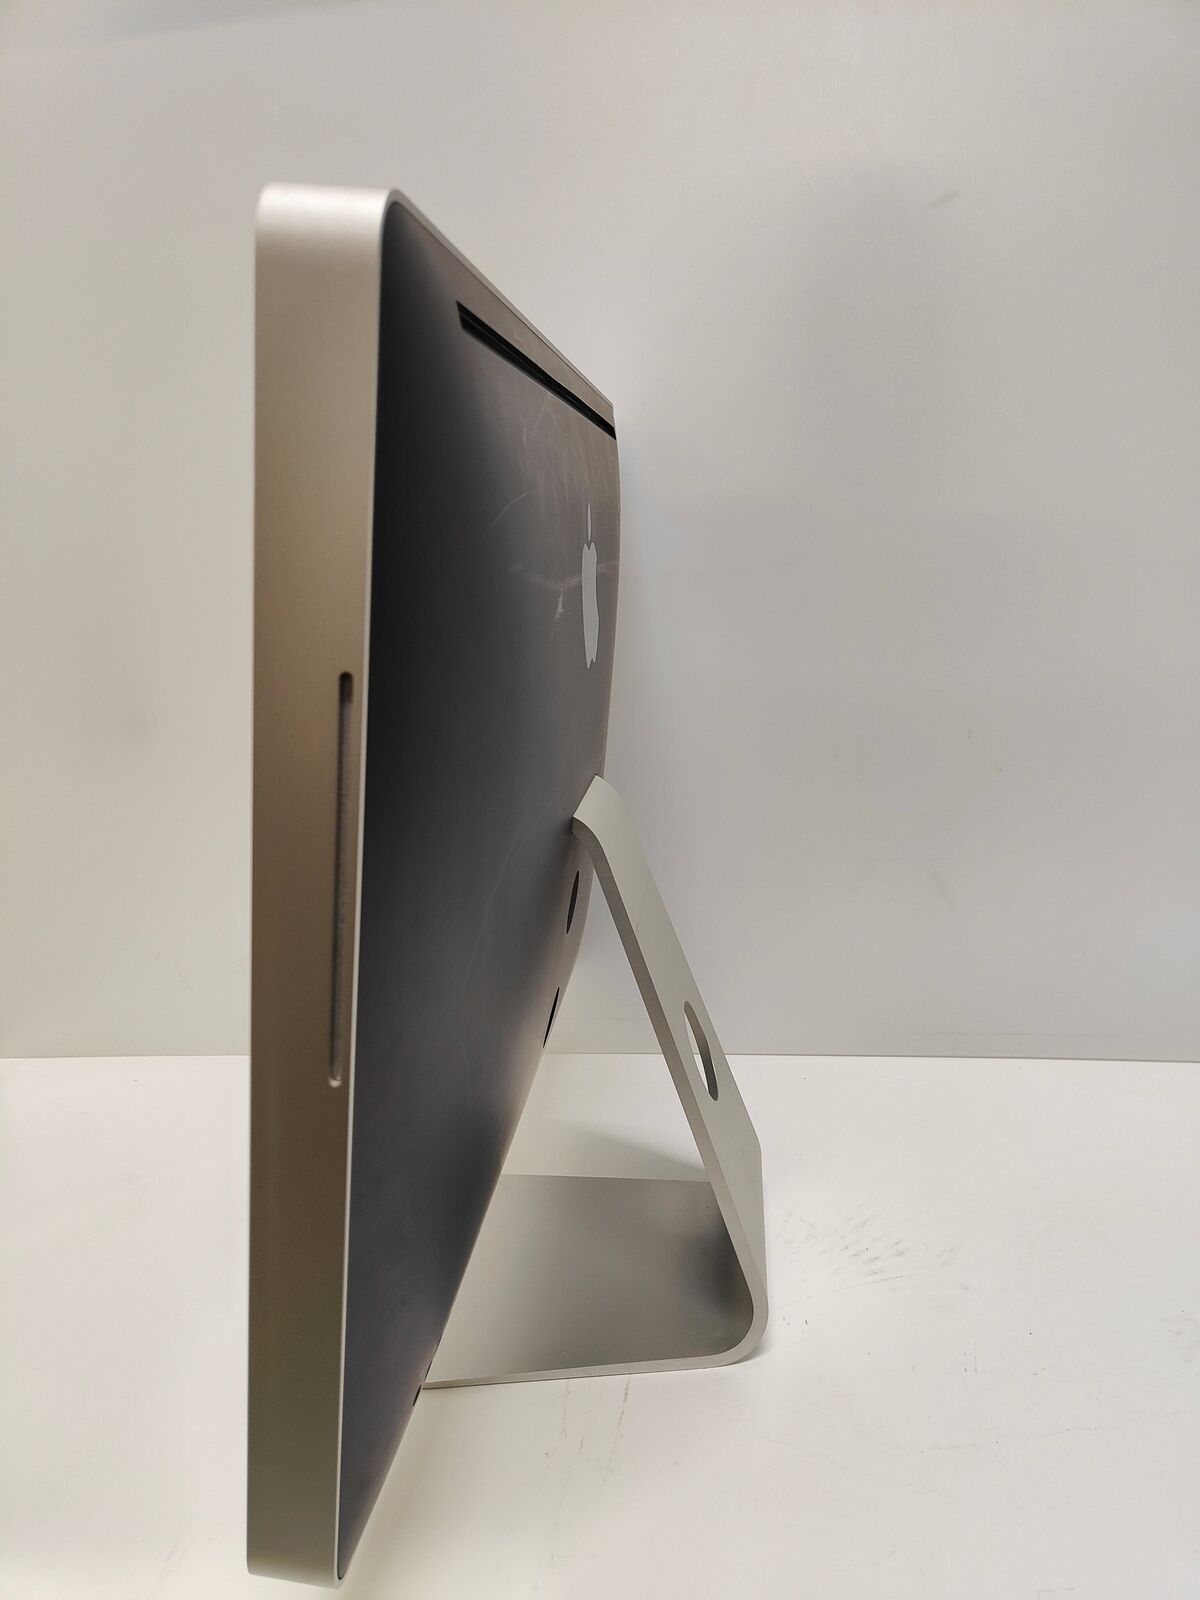 Apple iMac A1225 Early 2009 24-inch